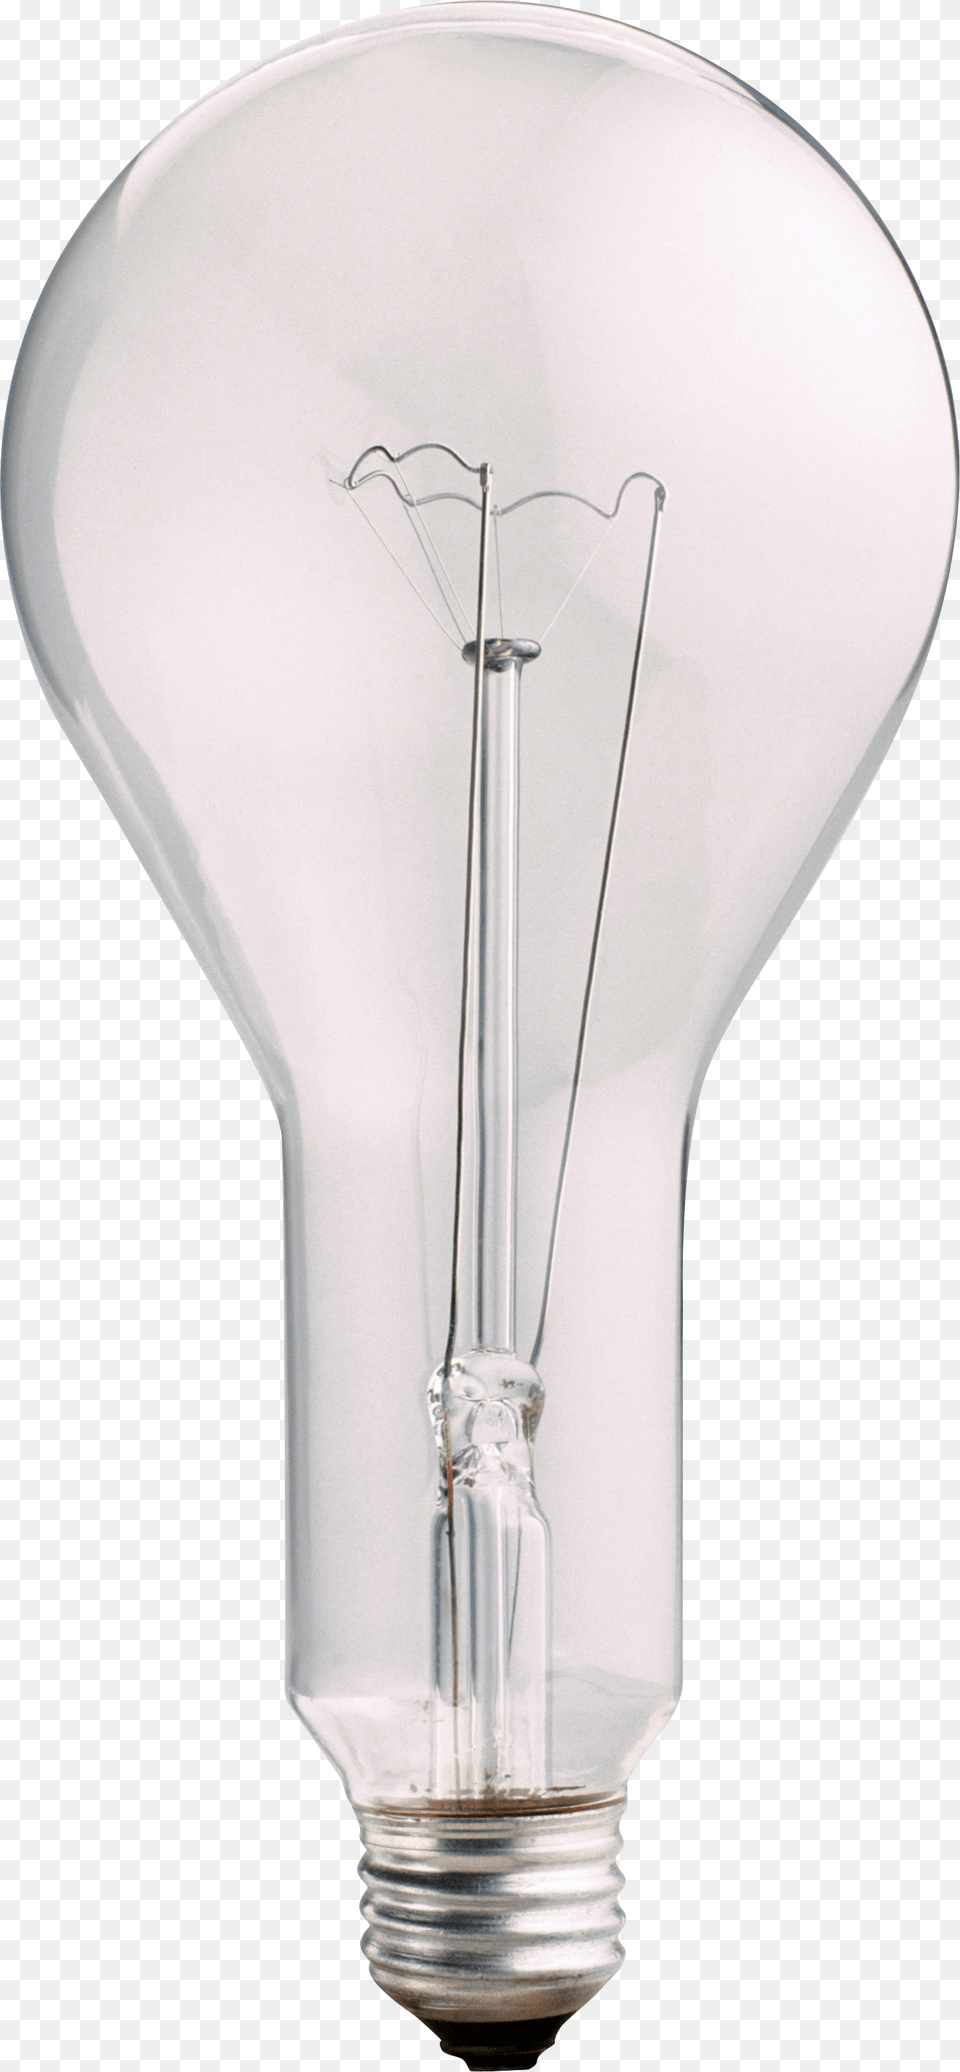 Lamp Image Purepng Transparent Cc0 Image Incandescent Light Bulb, Lightbulb, Smoke Pipe Free Png Download